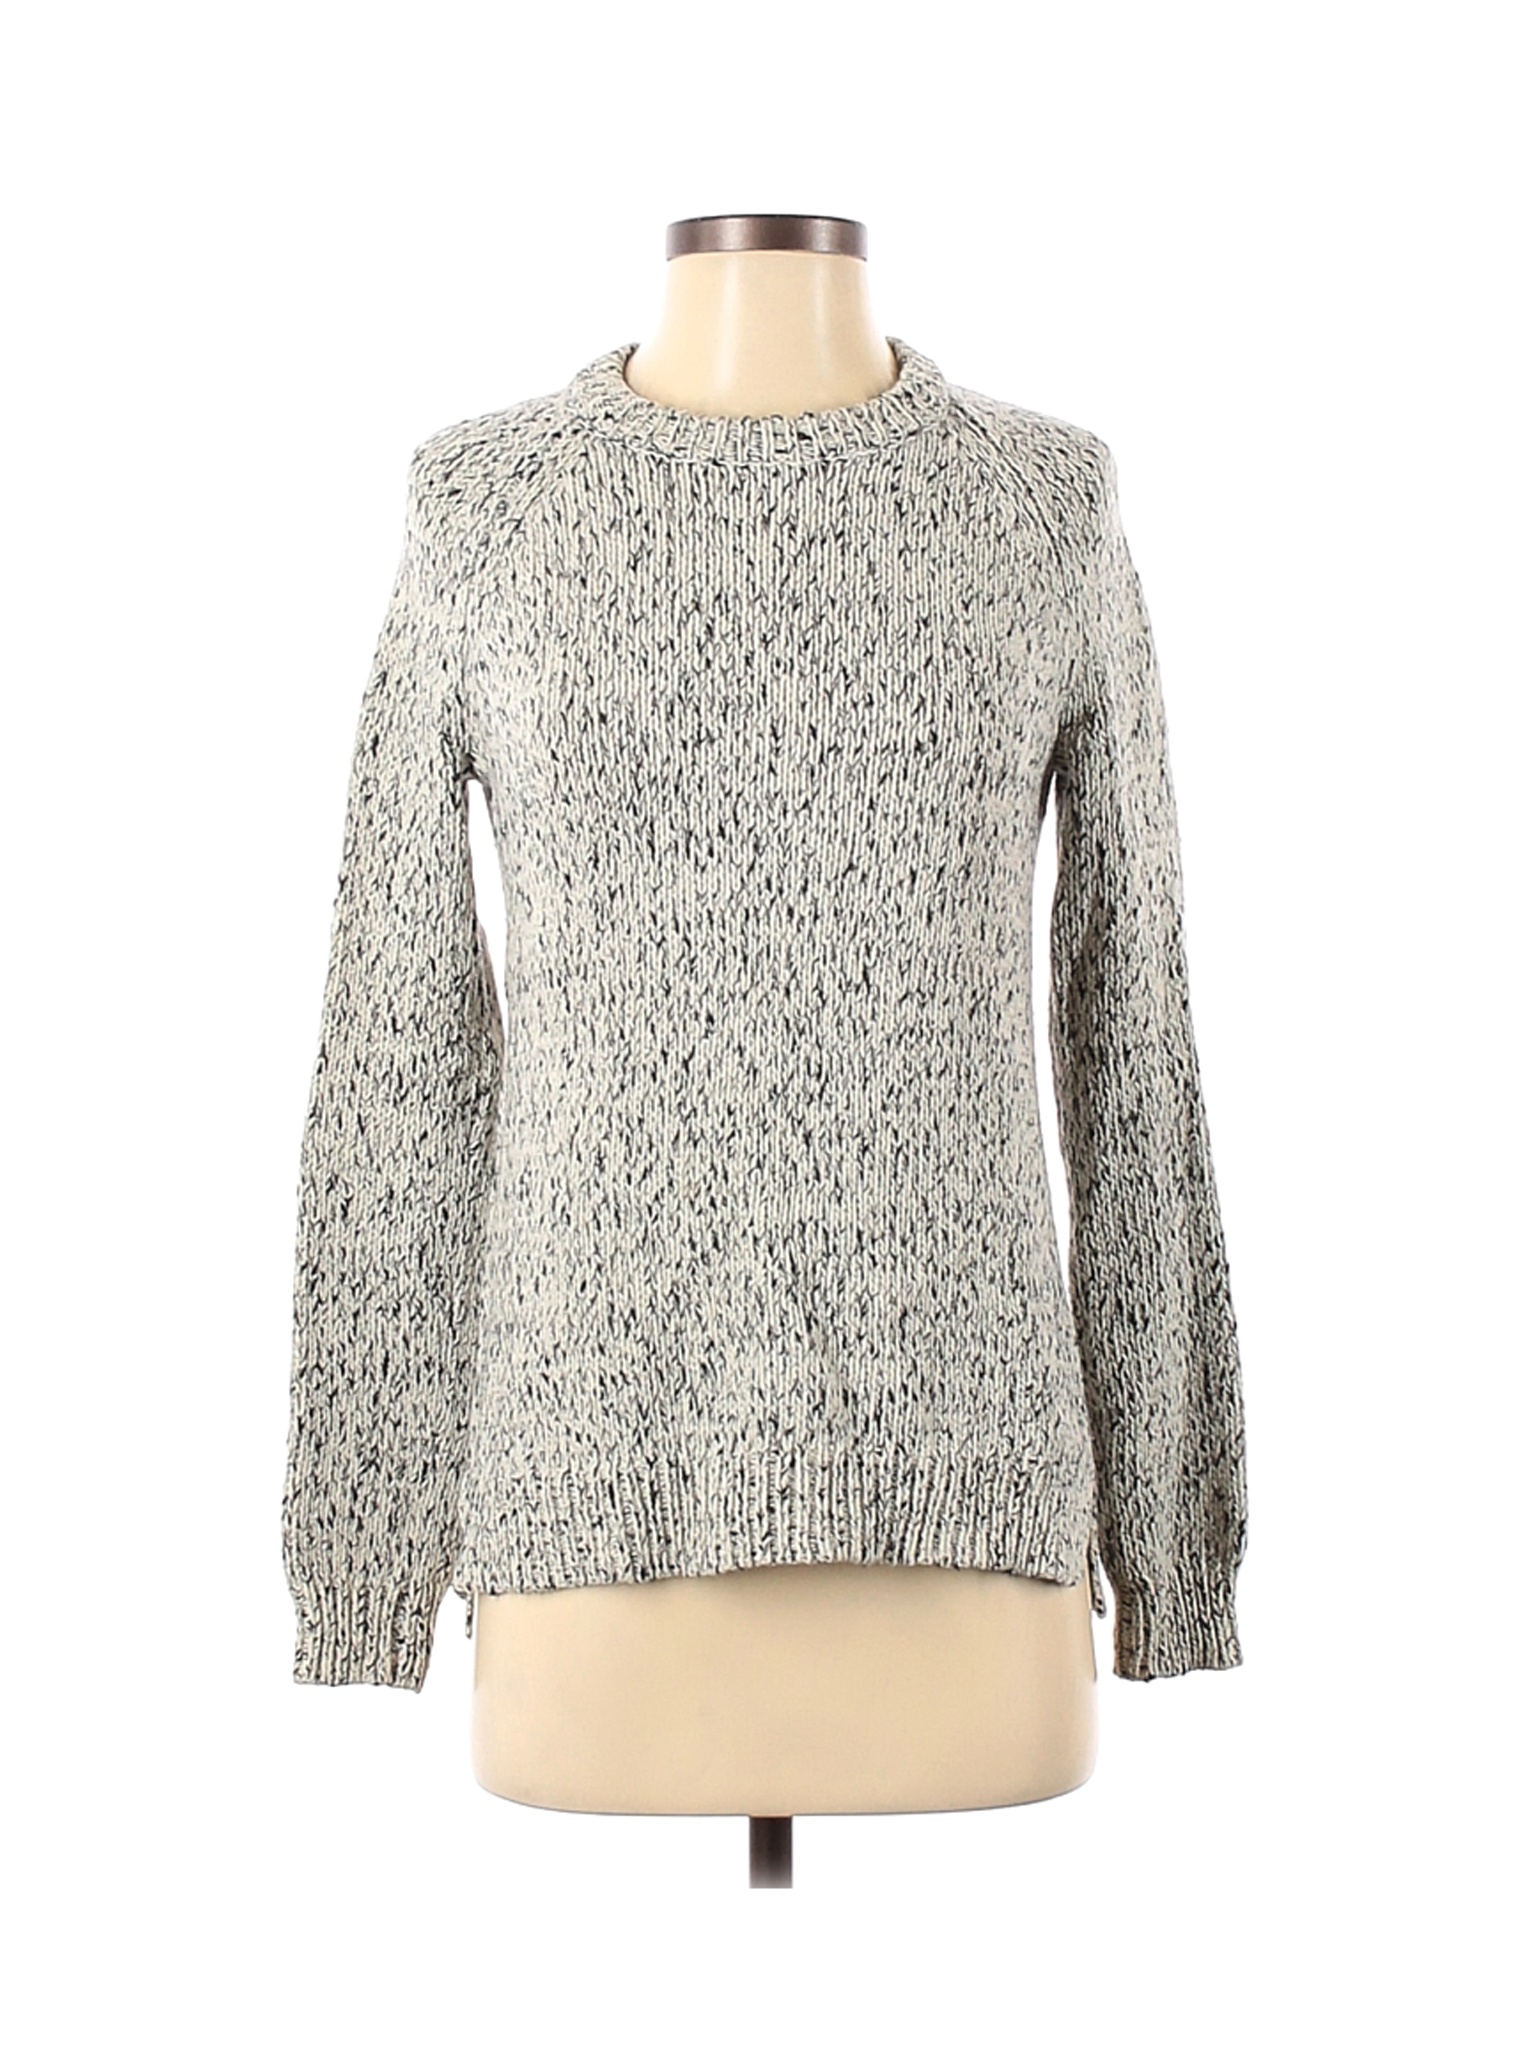 Theory Women Gray Wool Pullover Sweater P | eBay